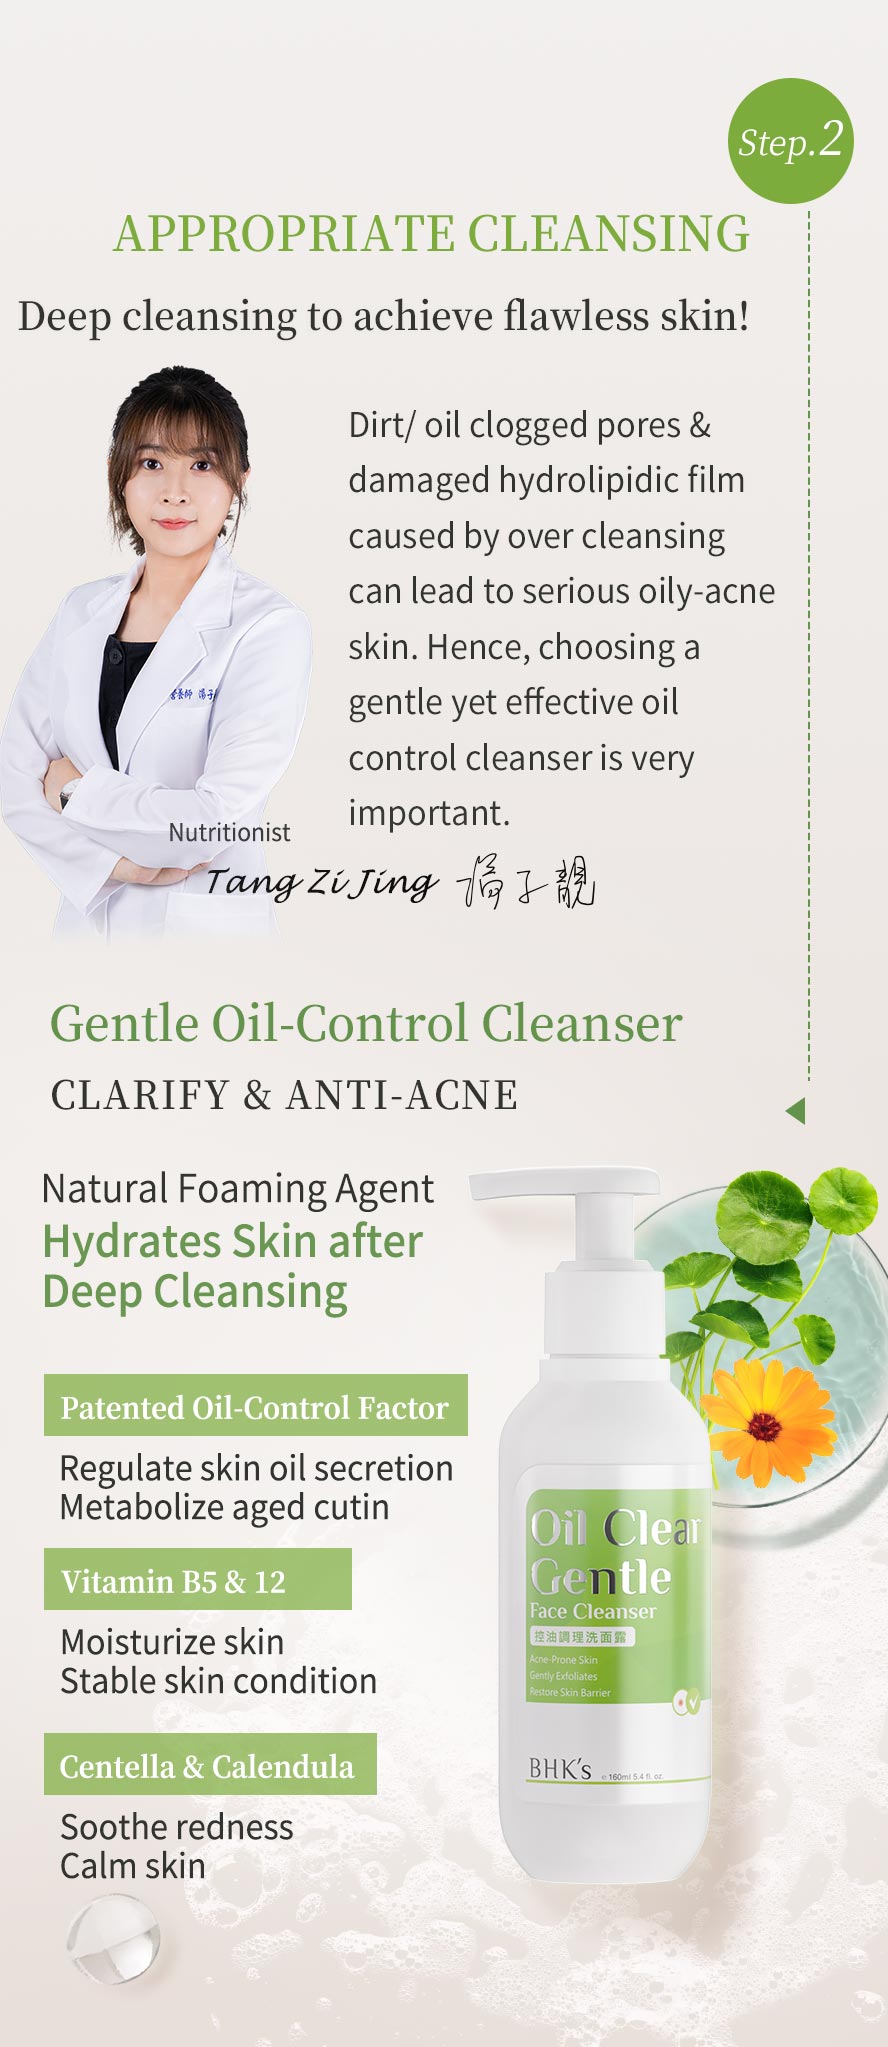 Gentle oil-control cleanser helps to regulate skin oil secretion, metabolize aged skin cutin, moisturize skin, and calm skin redness